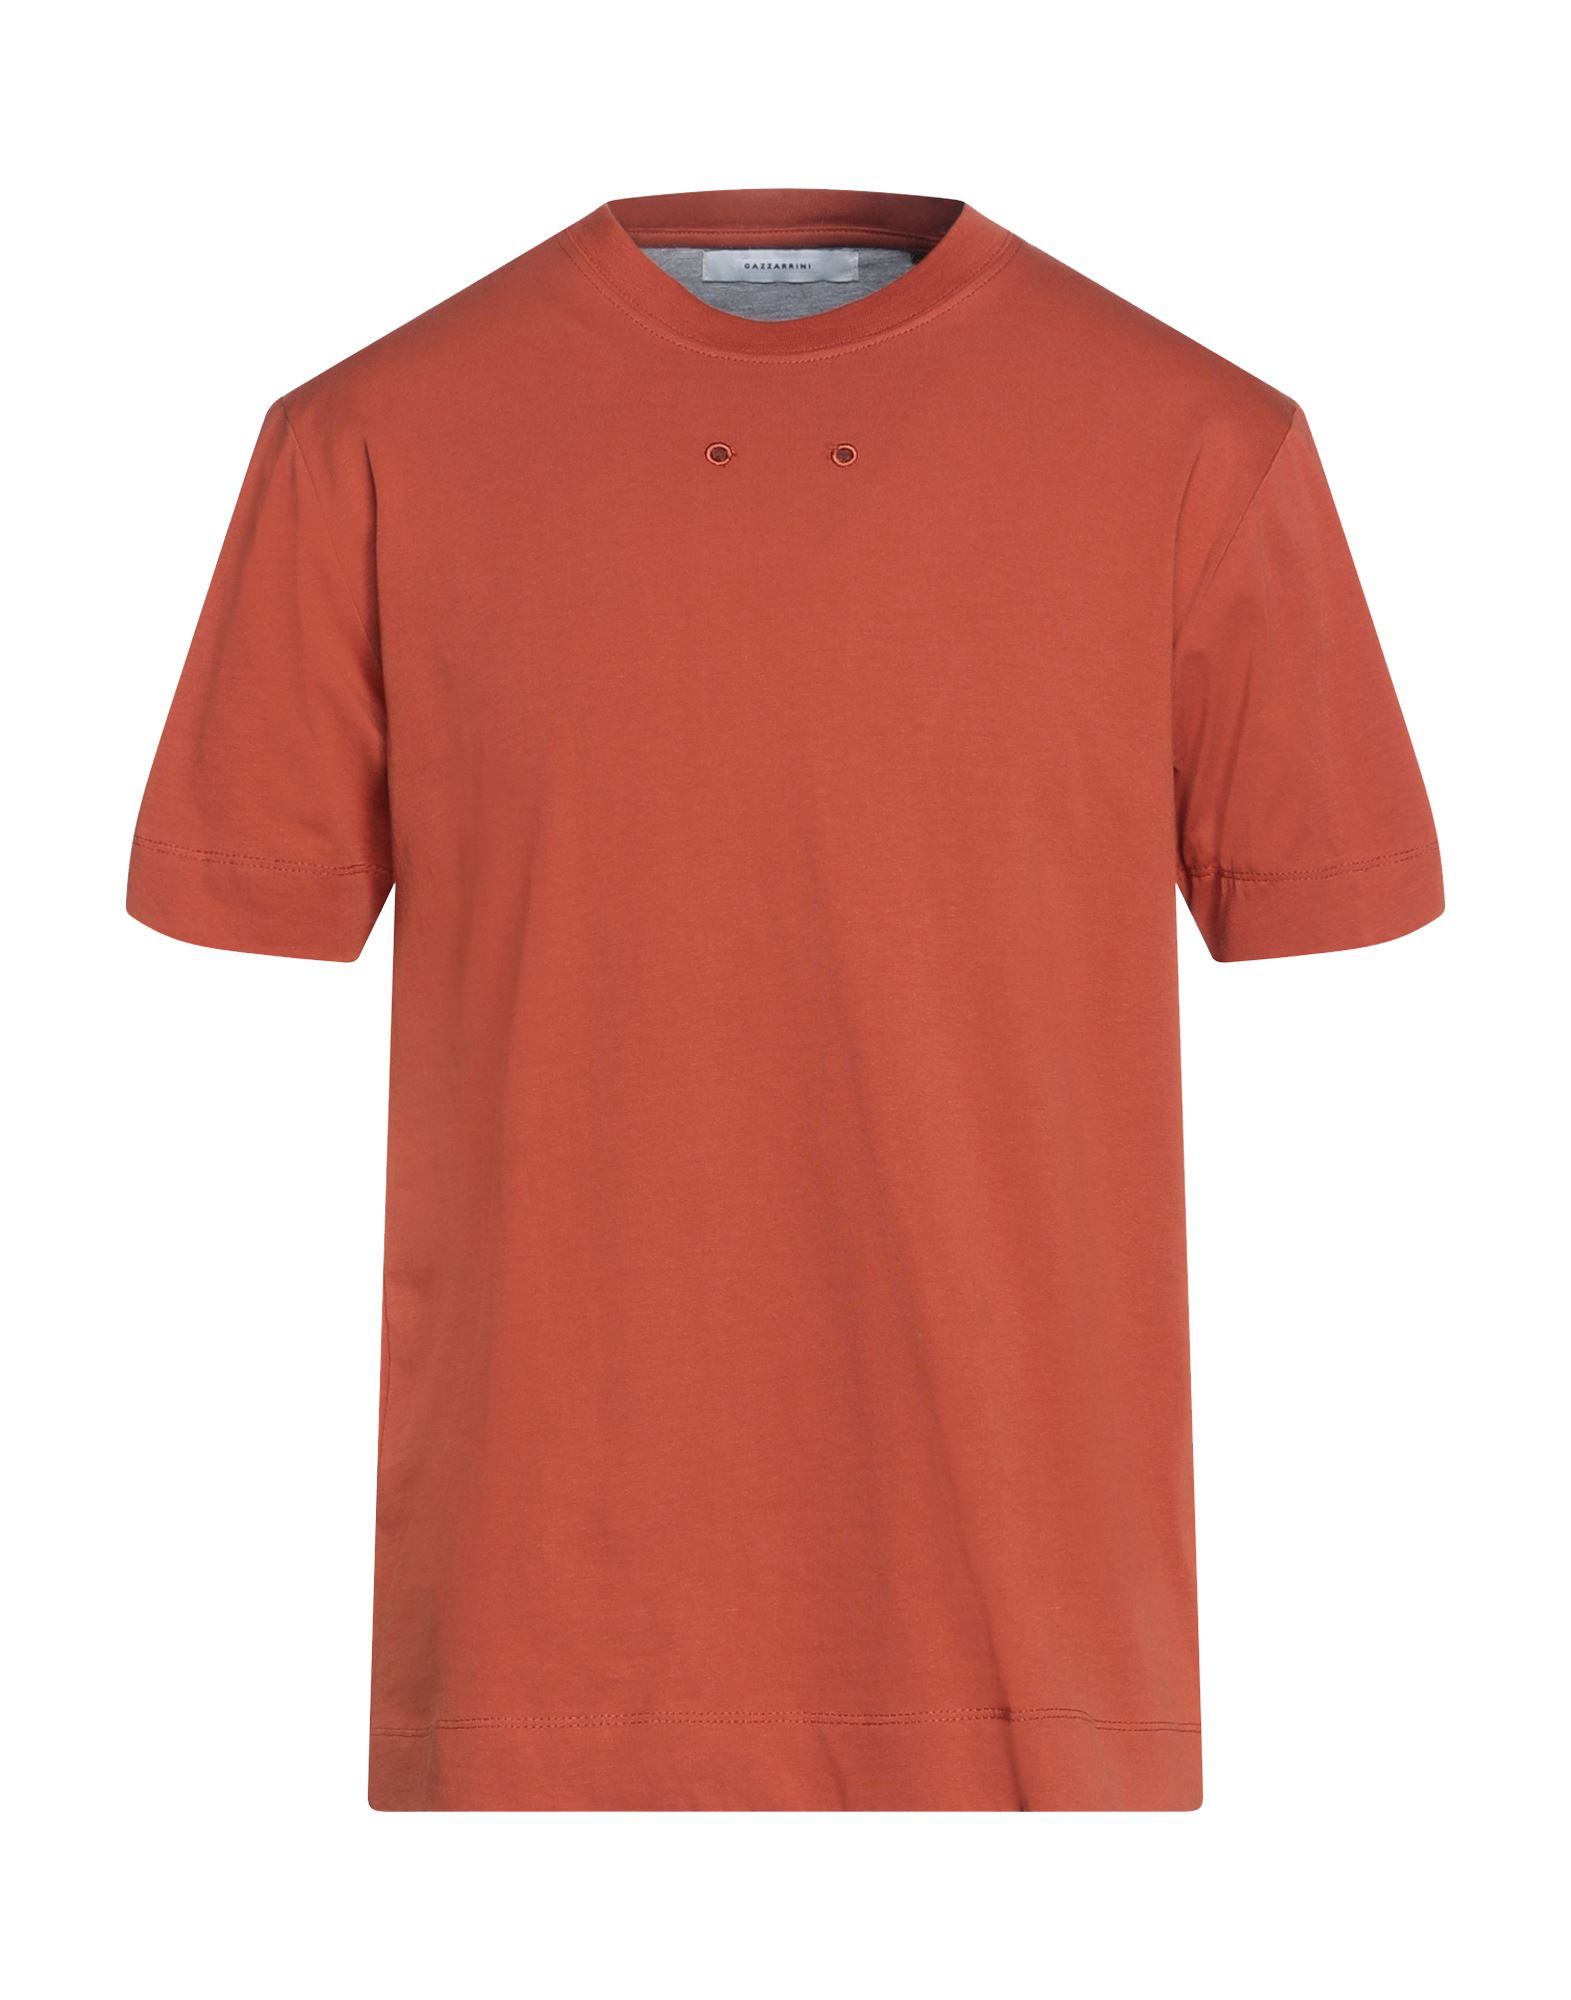 Gazzarrini T-shirts In Rust